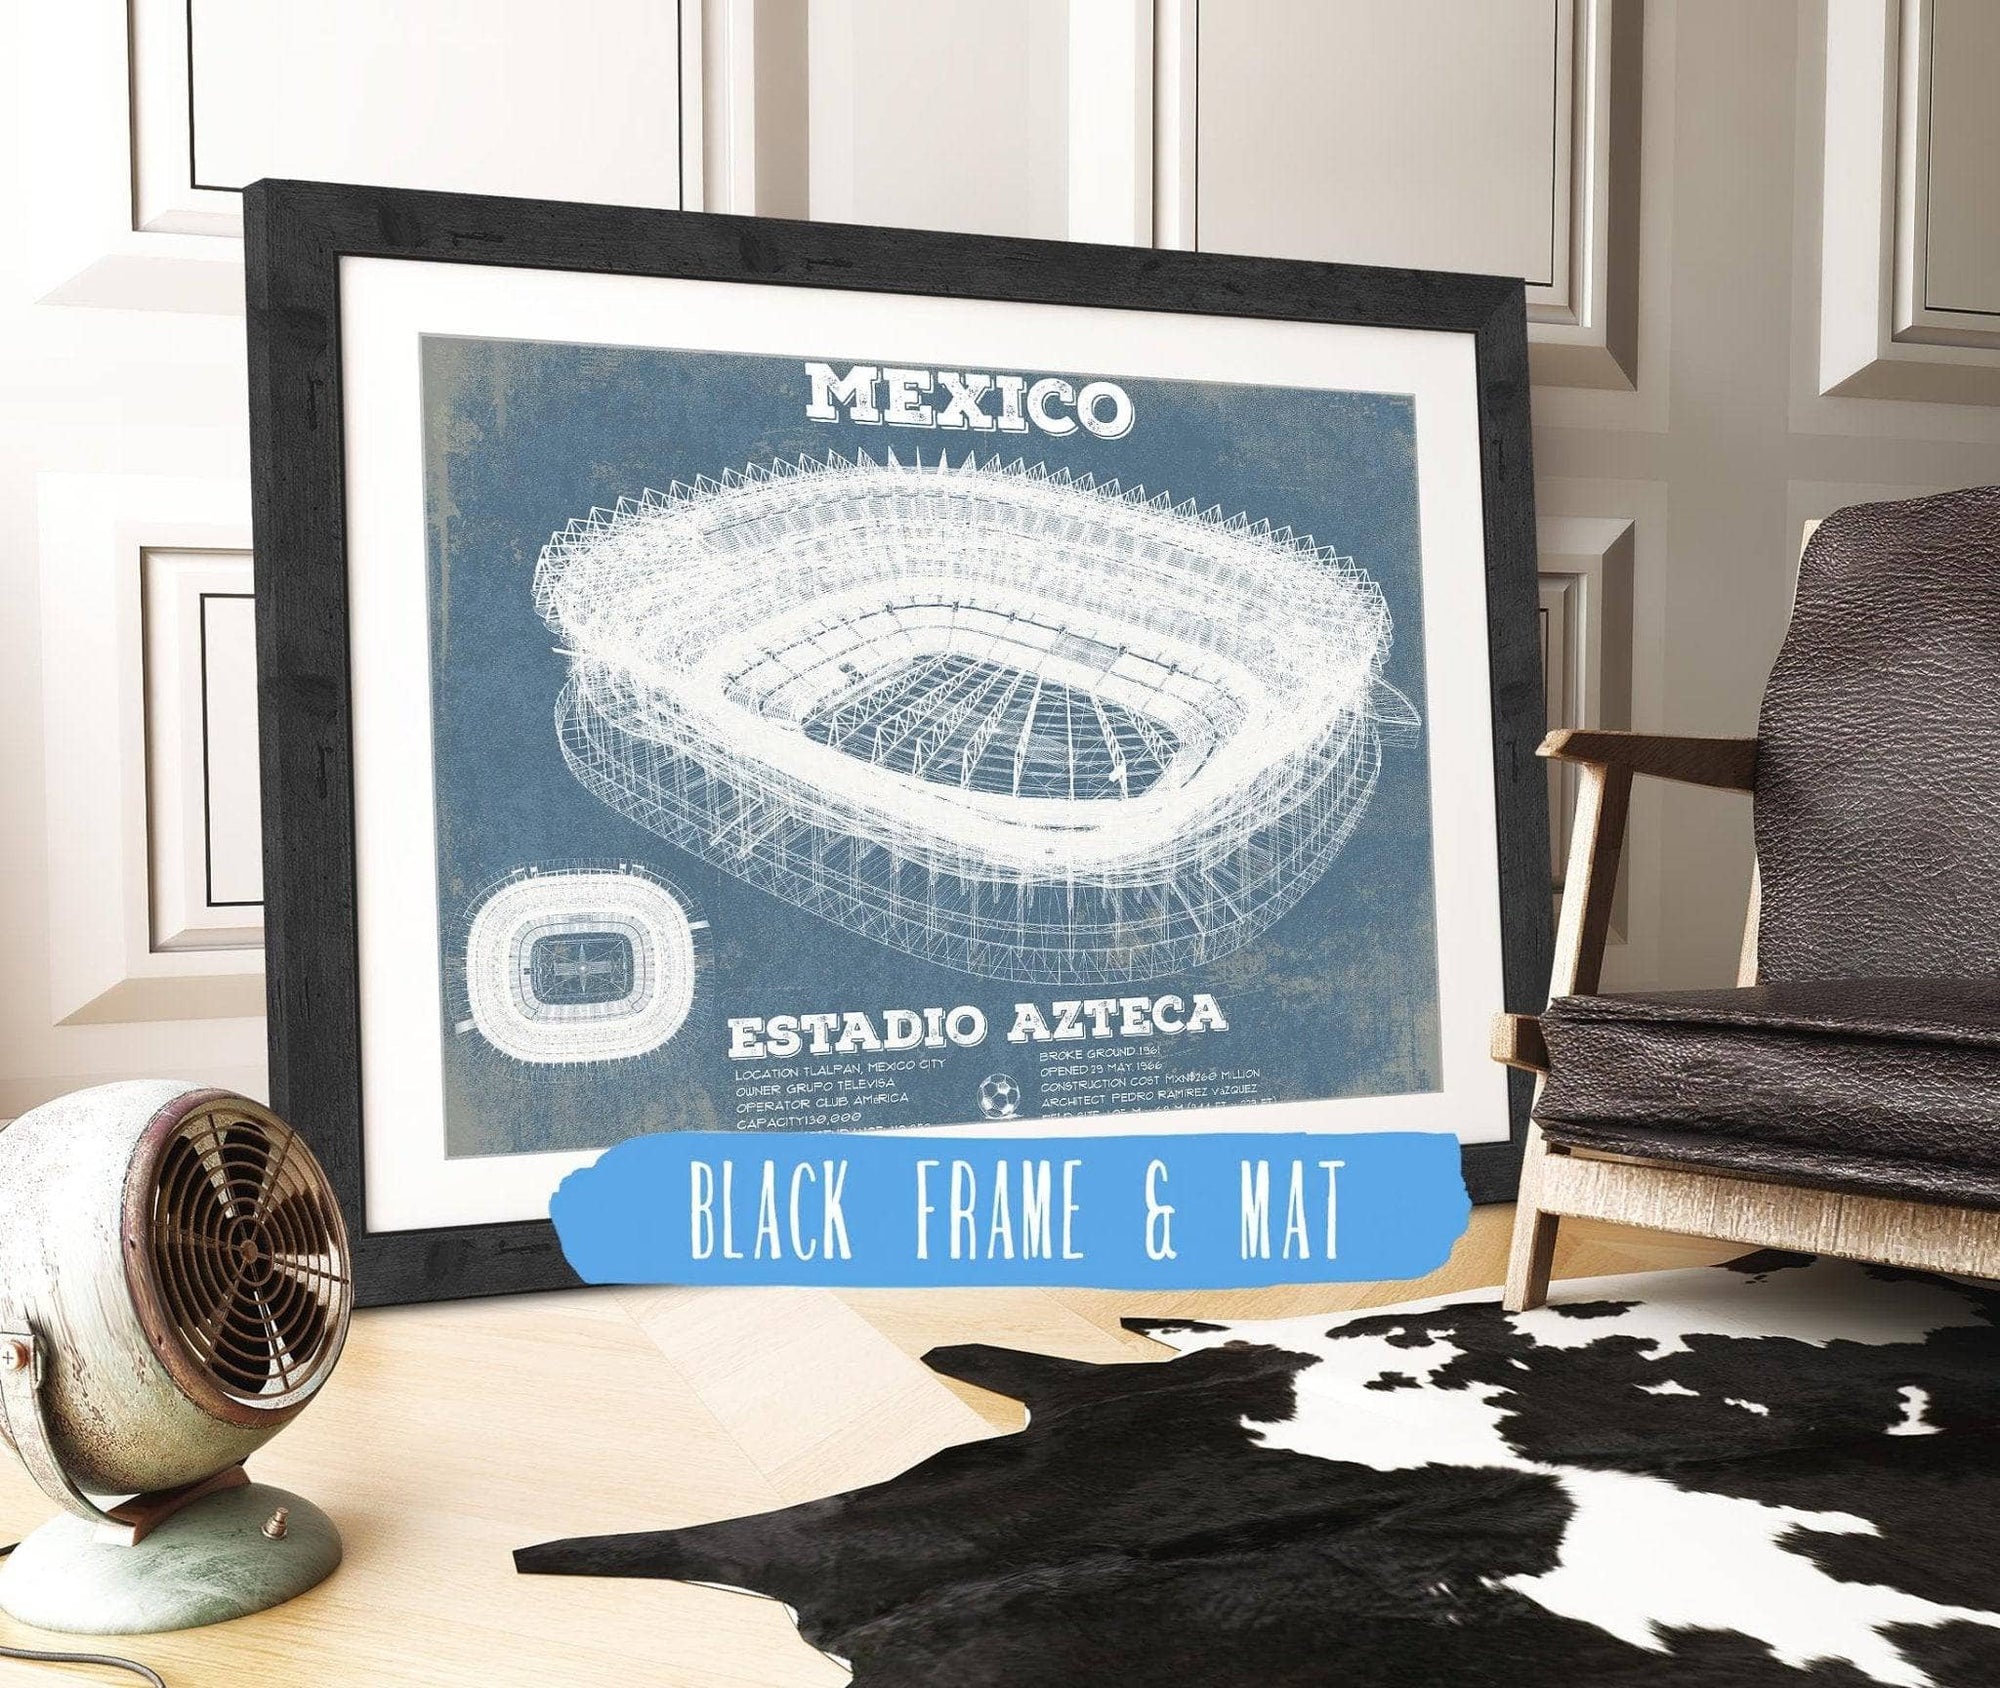 Cutler West Soccer Collection 14" x 11" / Black Frame & Mat Mexico Football - Vintage Estadio Azteca Stadium Soccer Print 755380905_74189